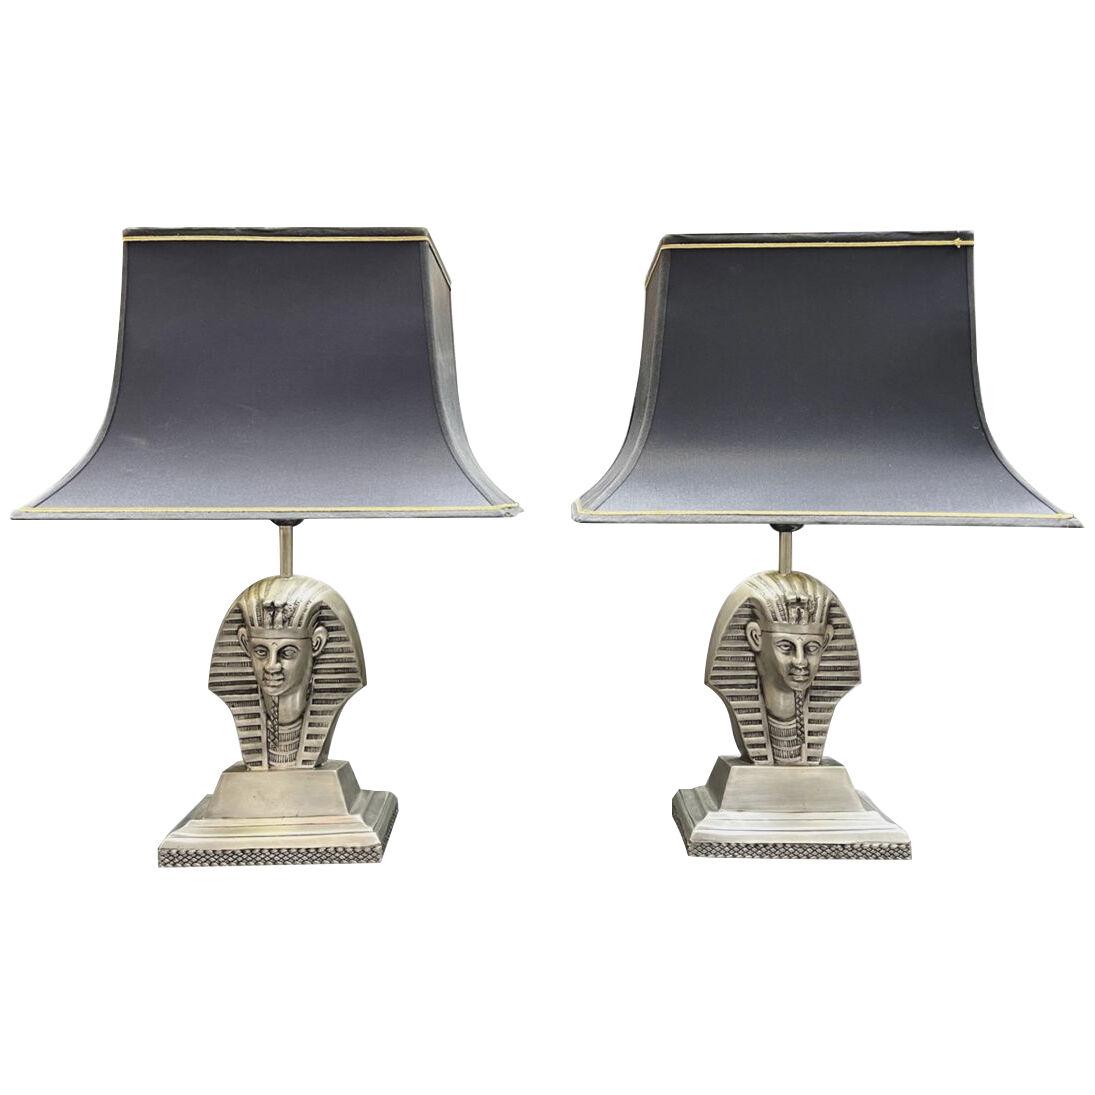 A Pair of Pharaoh Head Table Lamps